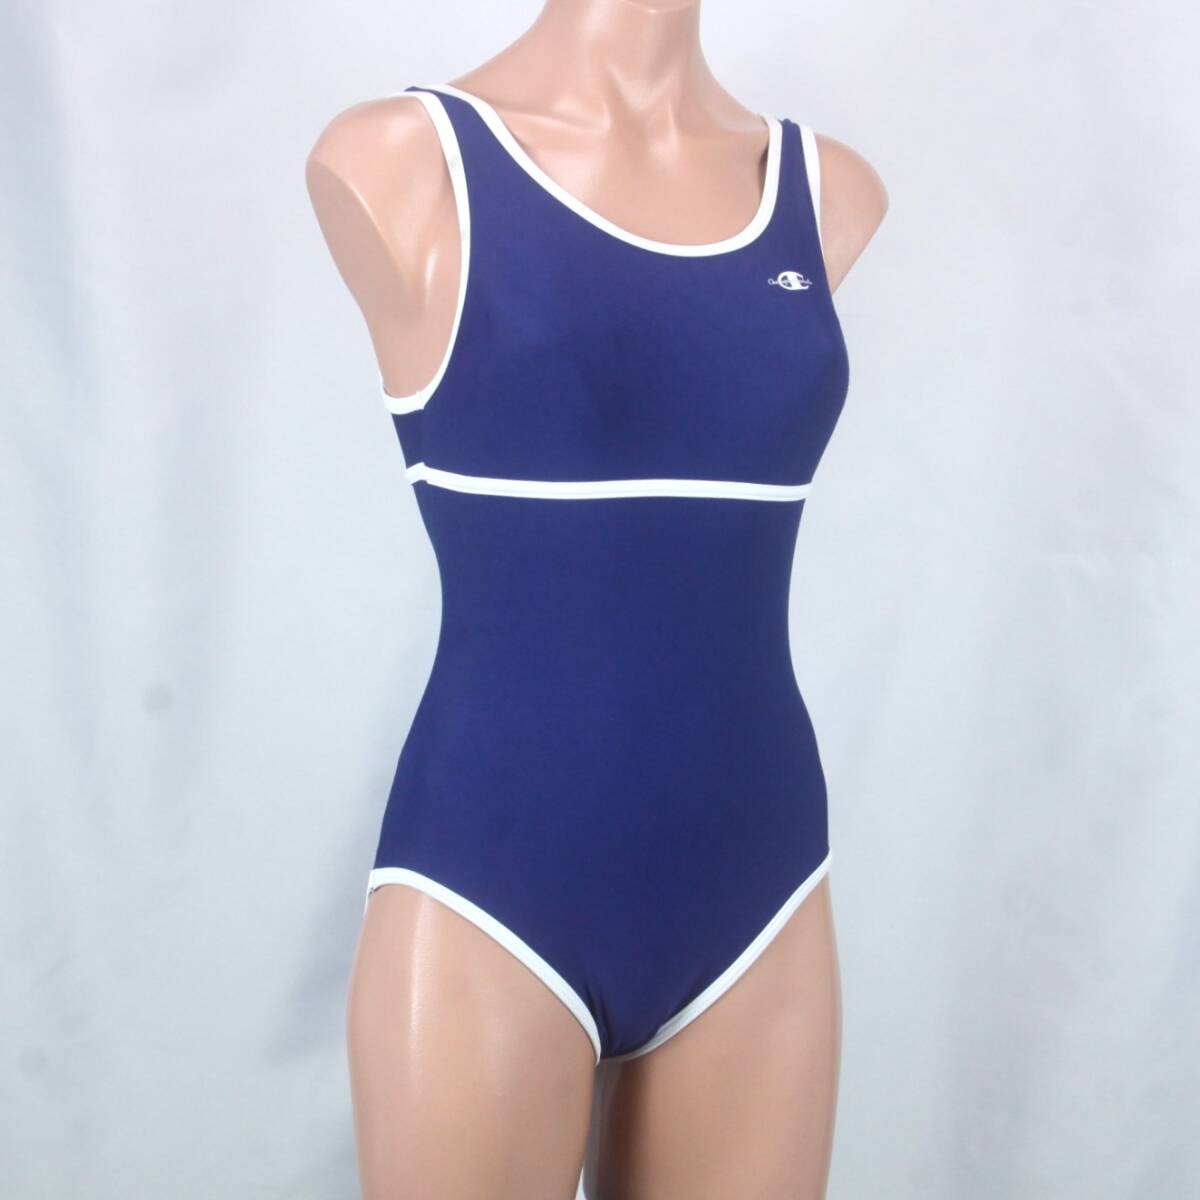 U8287★チャンピオン 水着 レディース ワンピース ネイビー ブルー 水泳 競泳 女子 スイムウェア スイミング プールの画像2